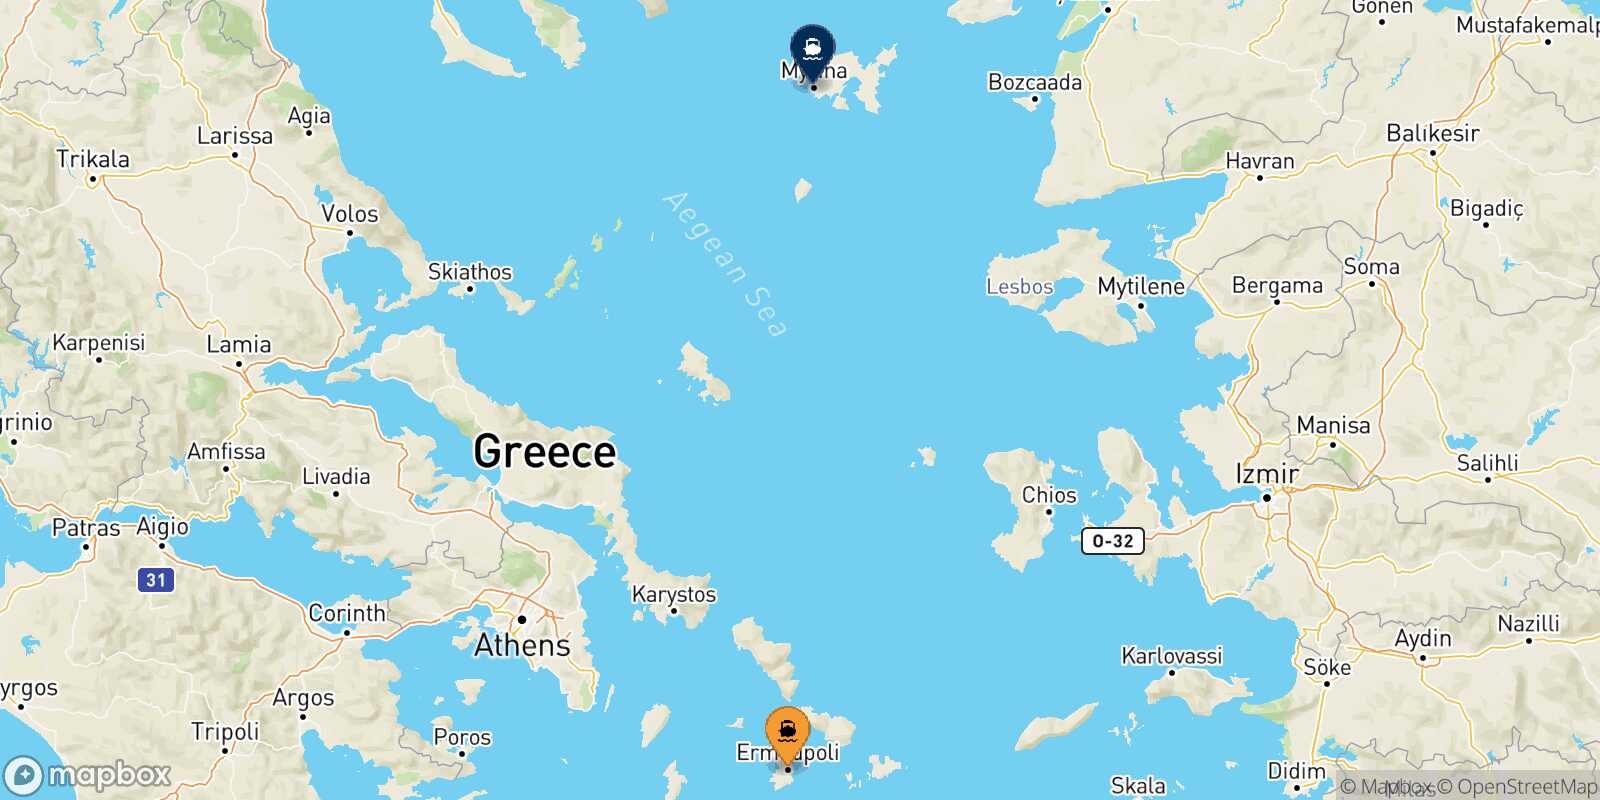 Syros Myrina (Limnos) route map